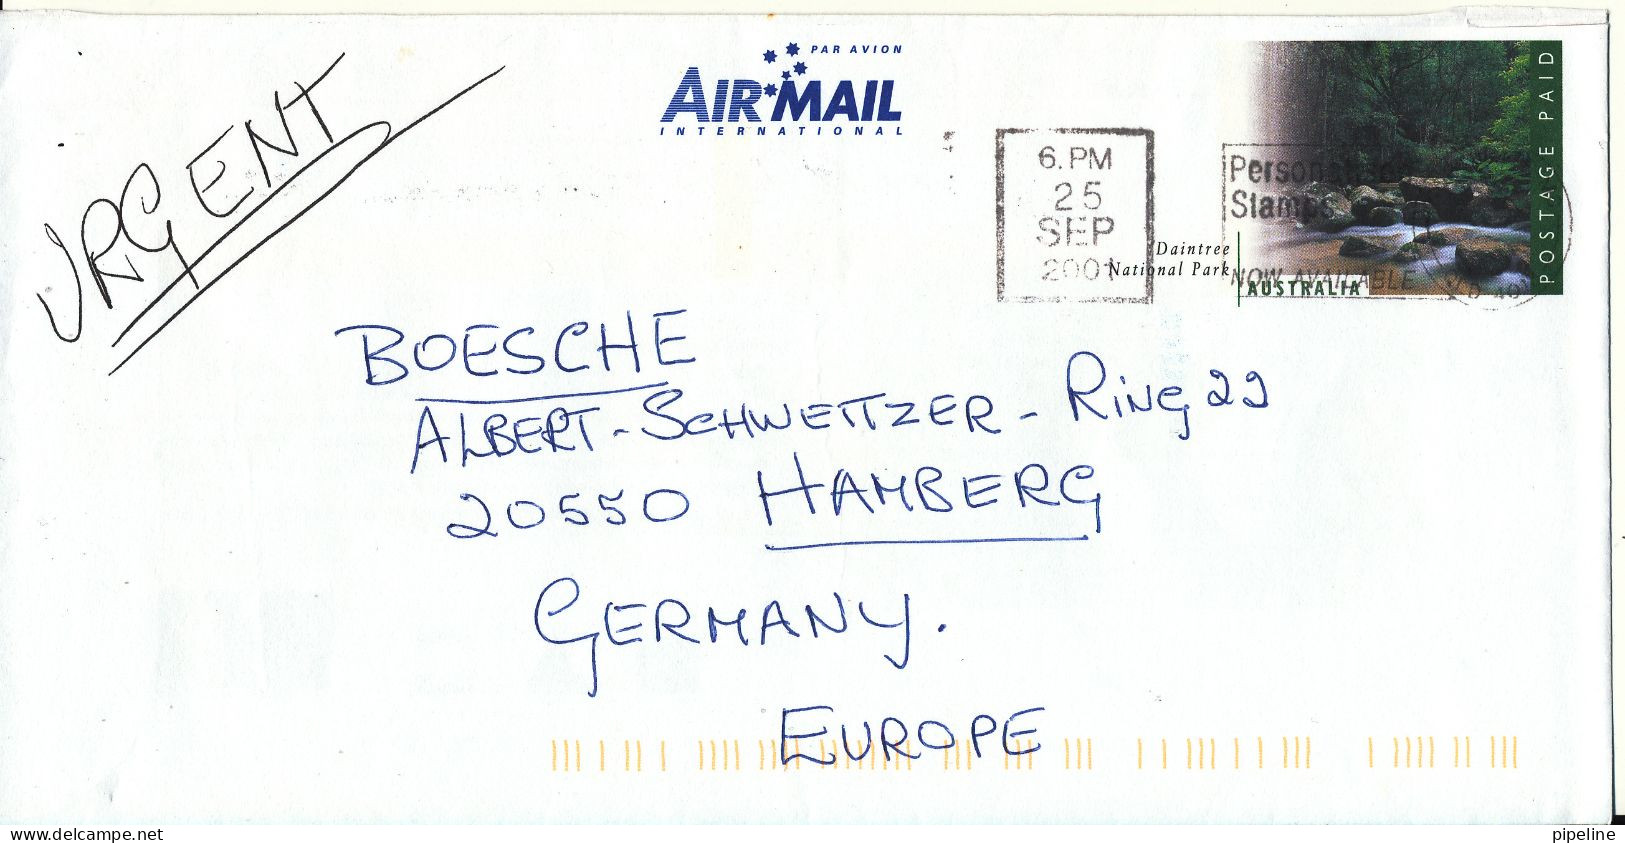 Australia Postal Stationery Air Mail Cover Sent To Germany 25-9-2001 - Interi Postali